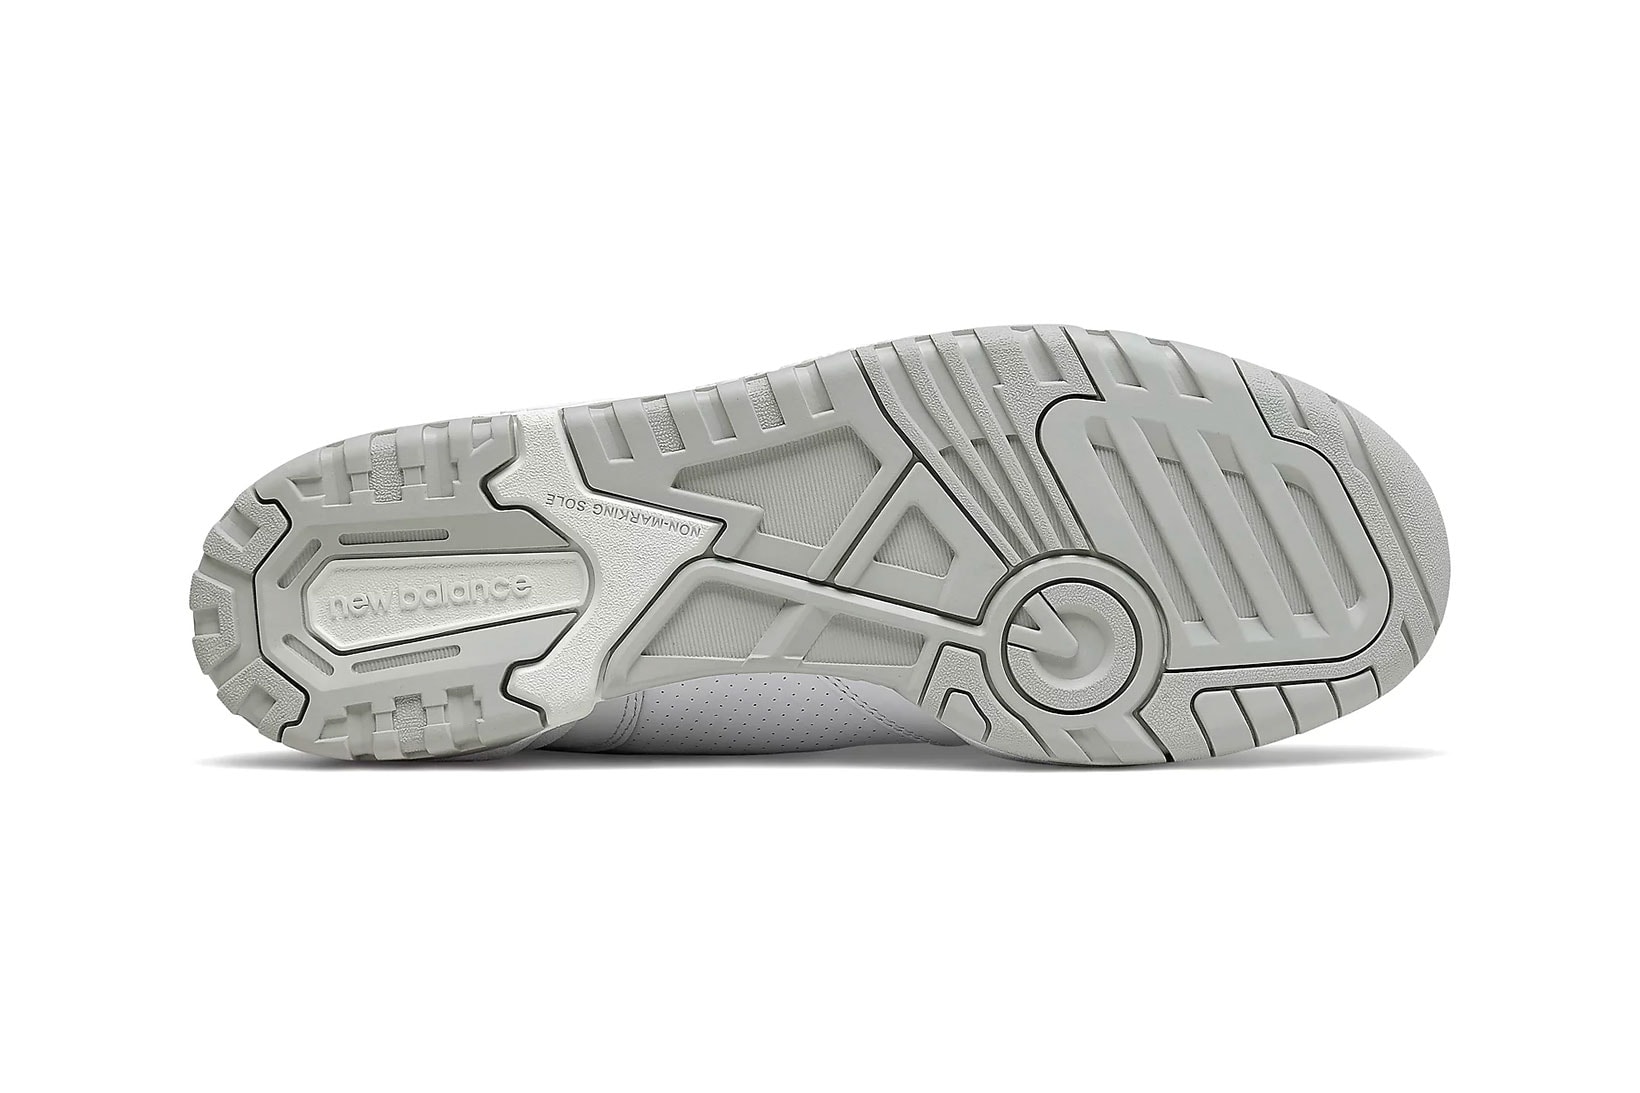 New Balance 550 White Gray Colorway Sneakers Footwear Shoes Kicks Sneakerheads